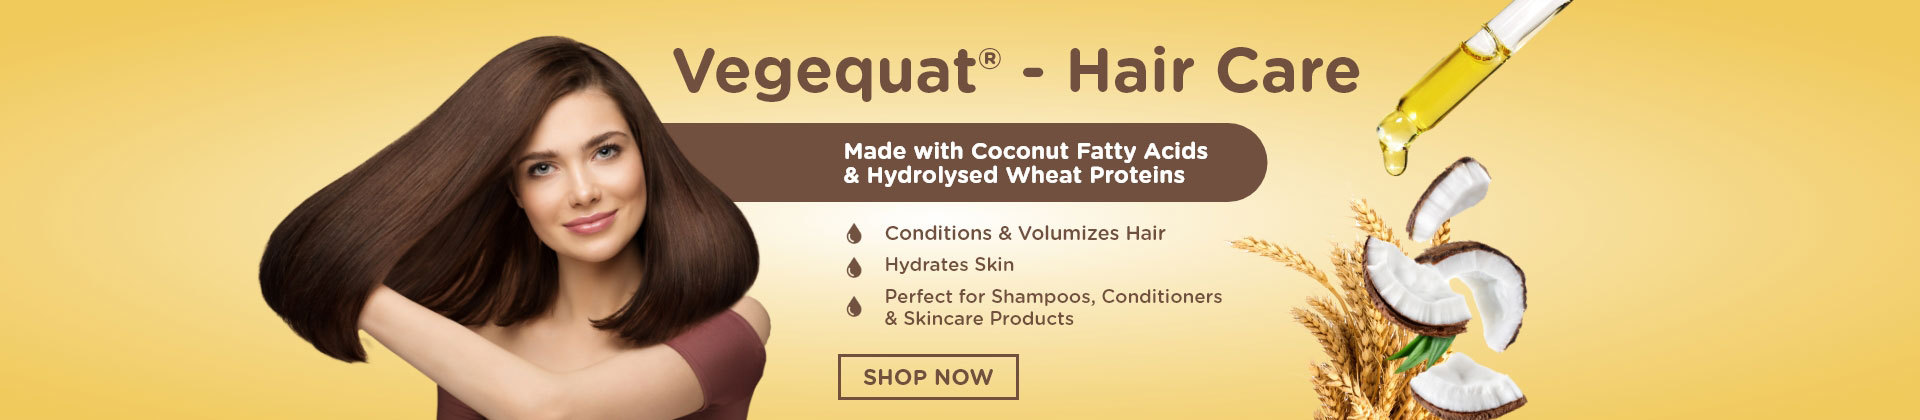 Vegequat - Hair Care